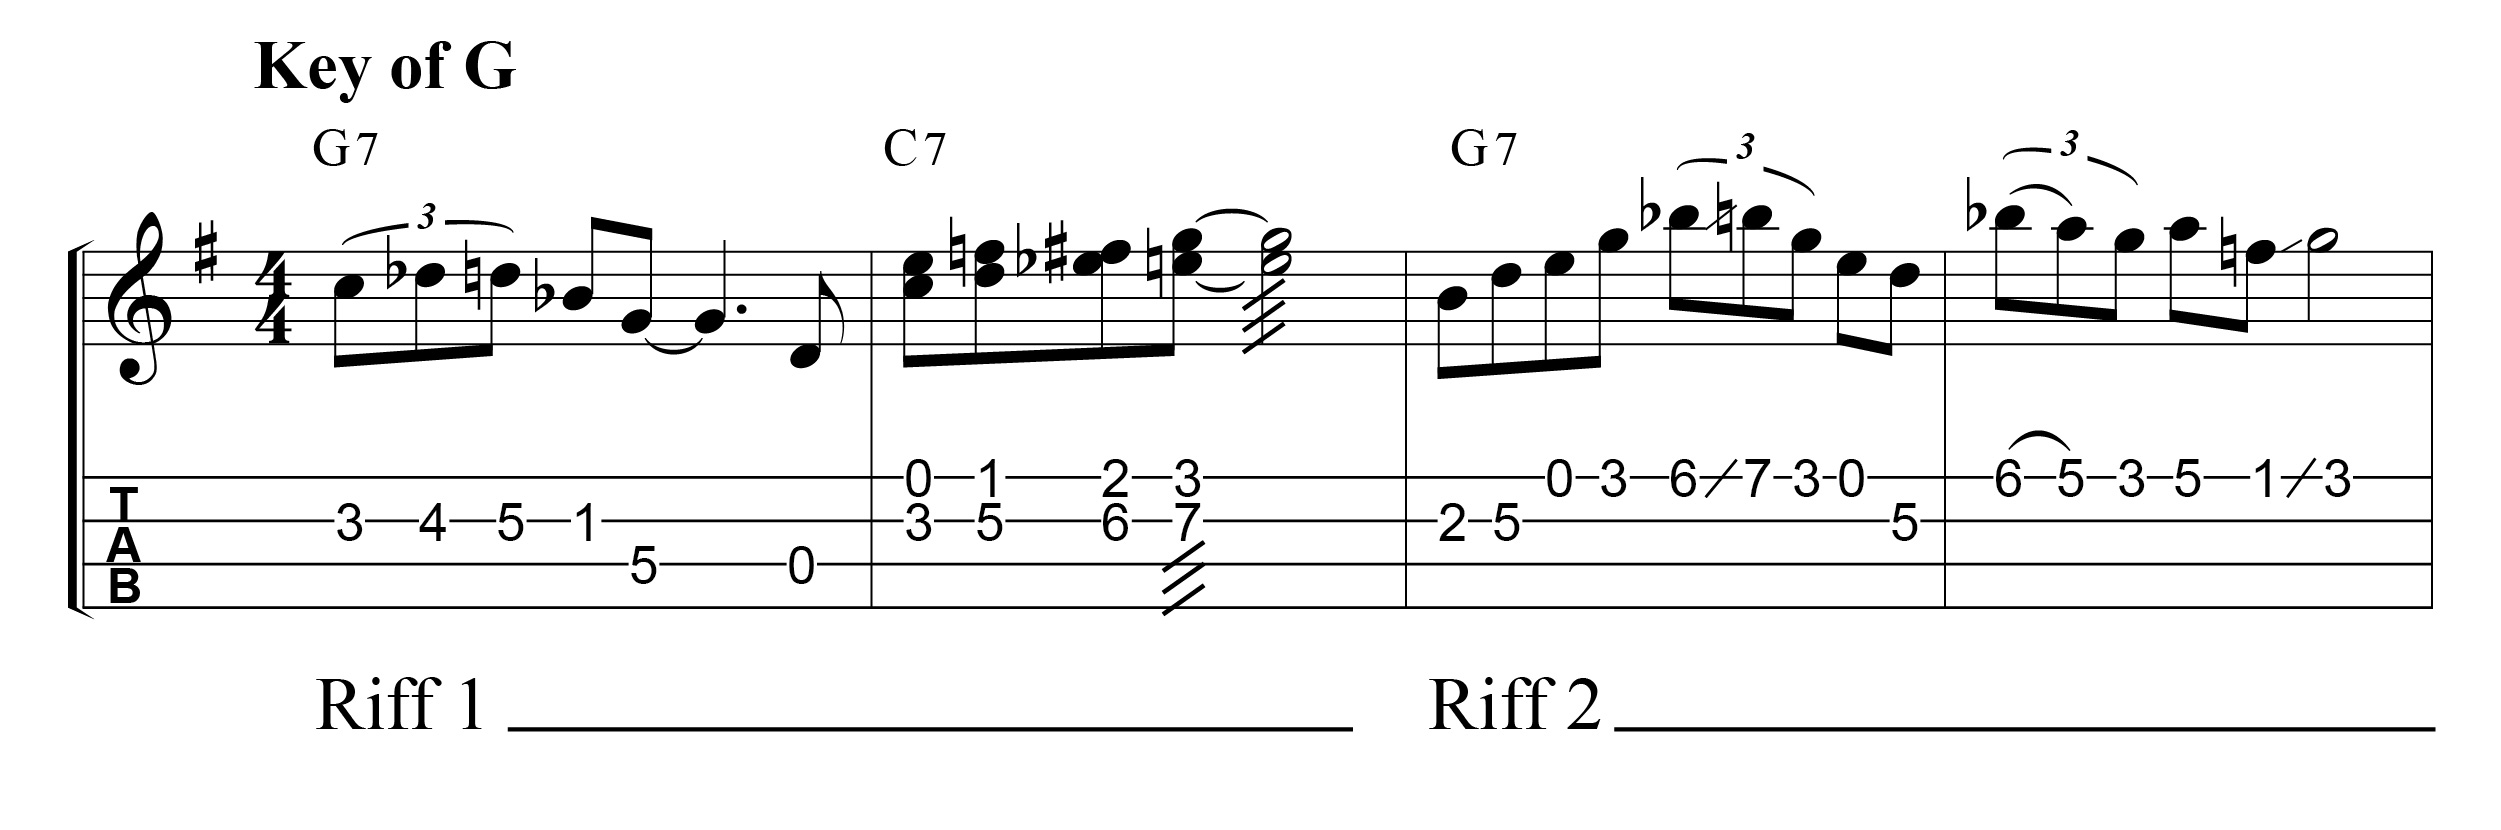 Mandolin Blues Solo Riffs-1 and 2